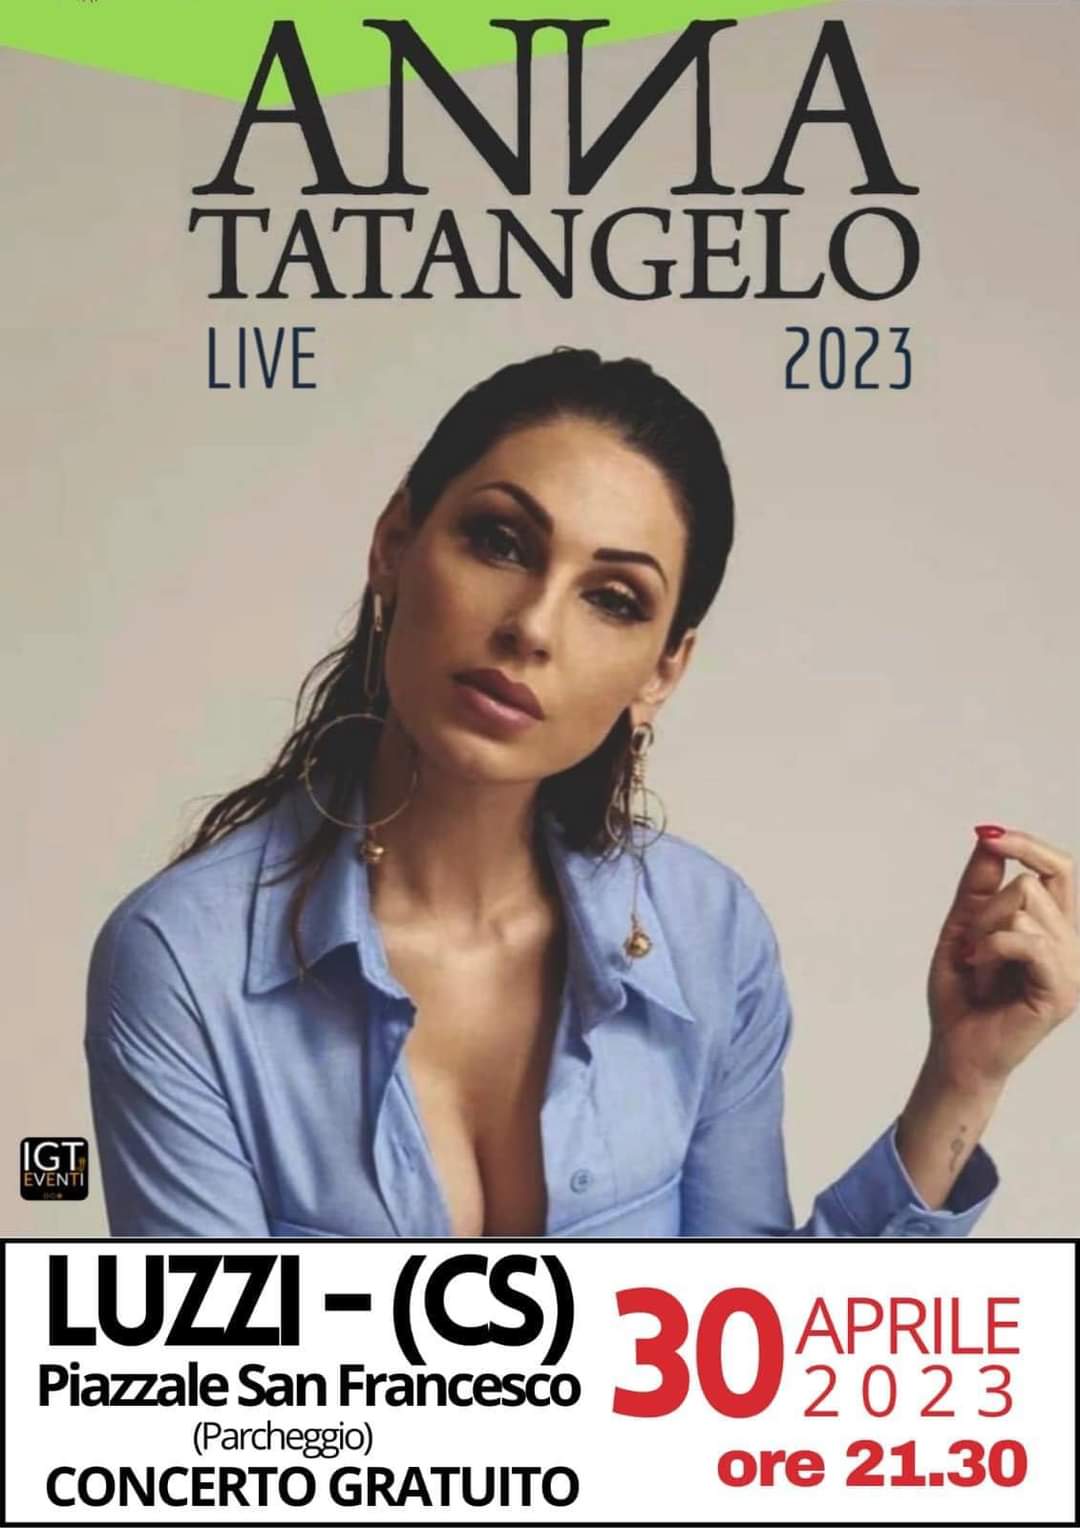 Anna Tatangelo Luzzi